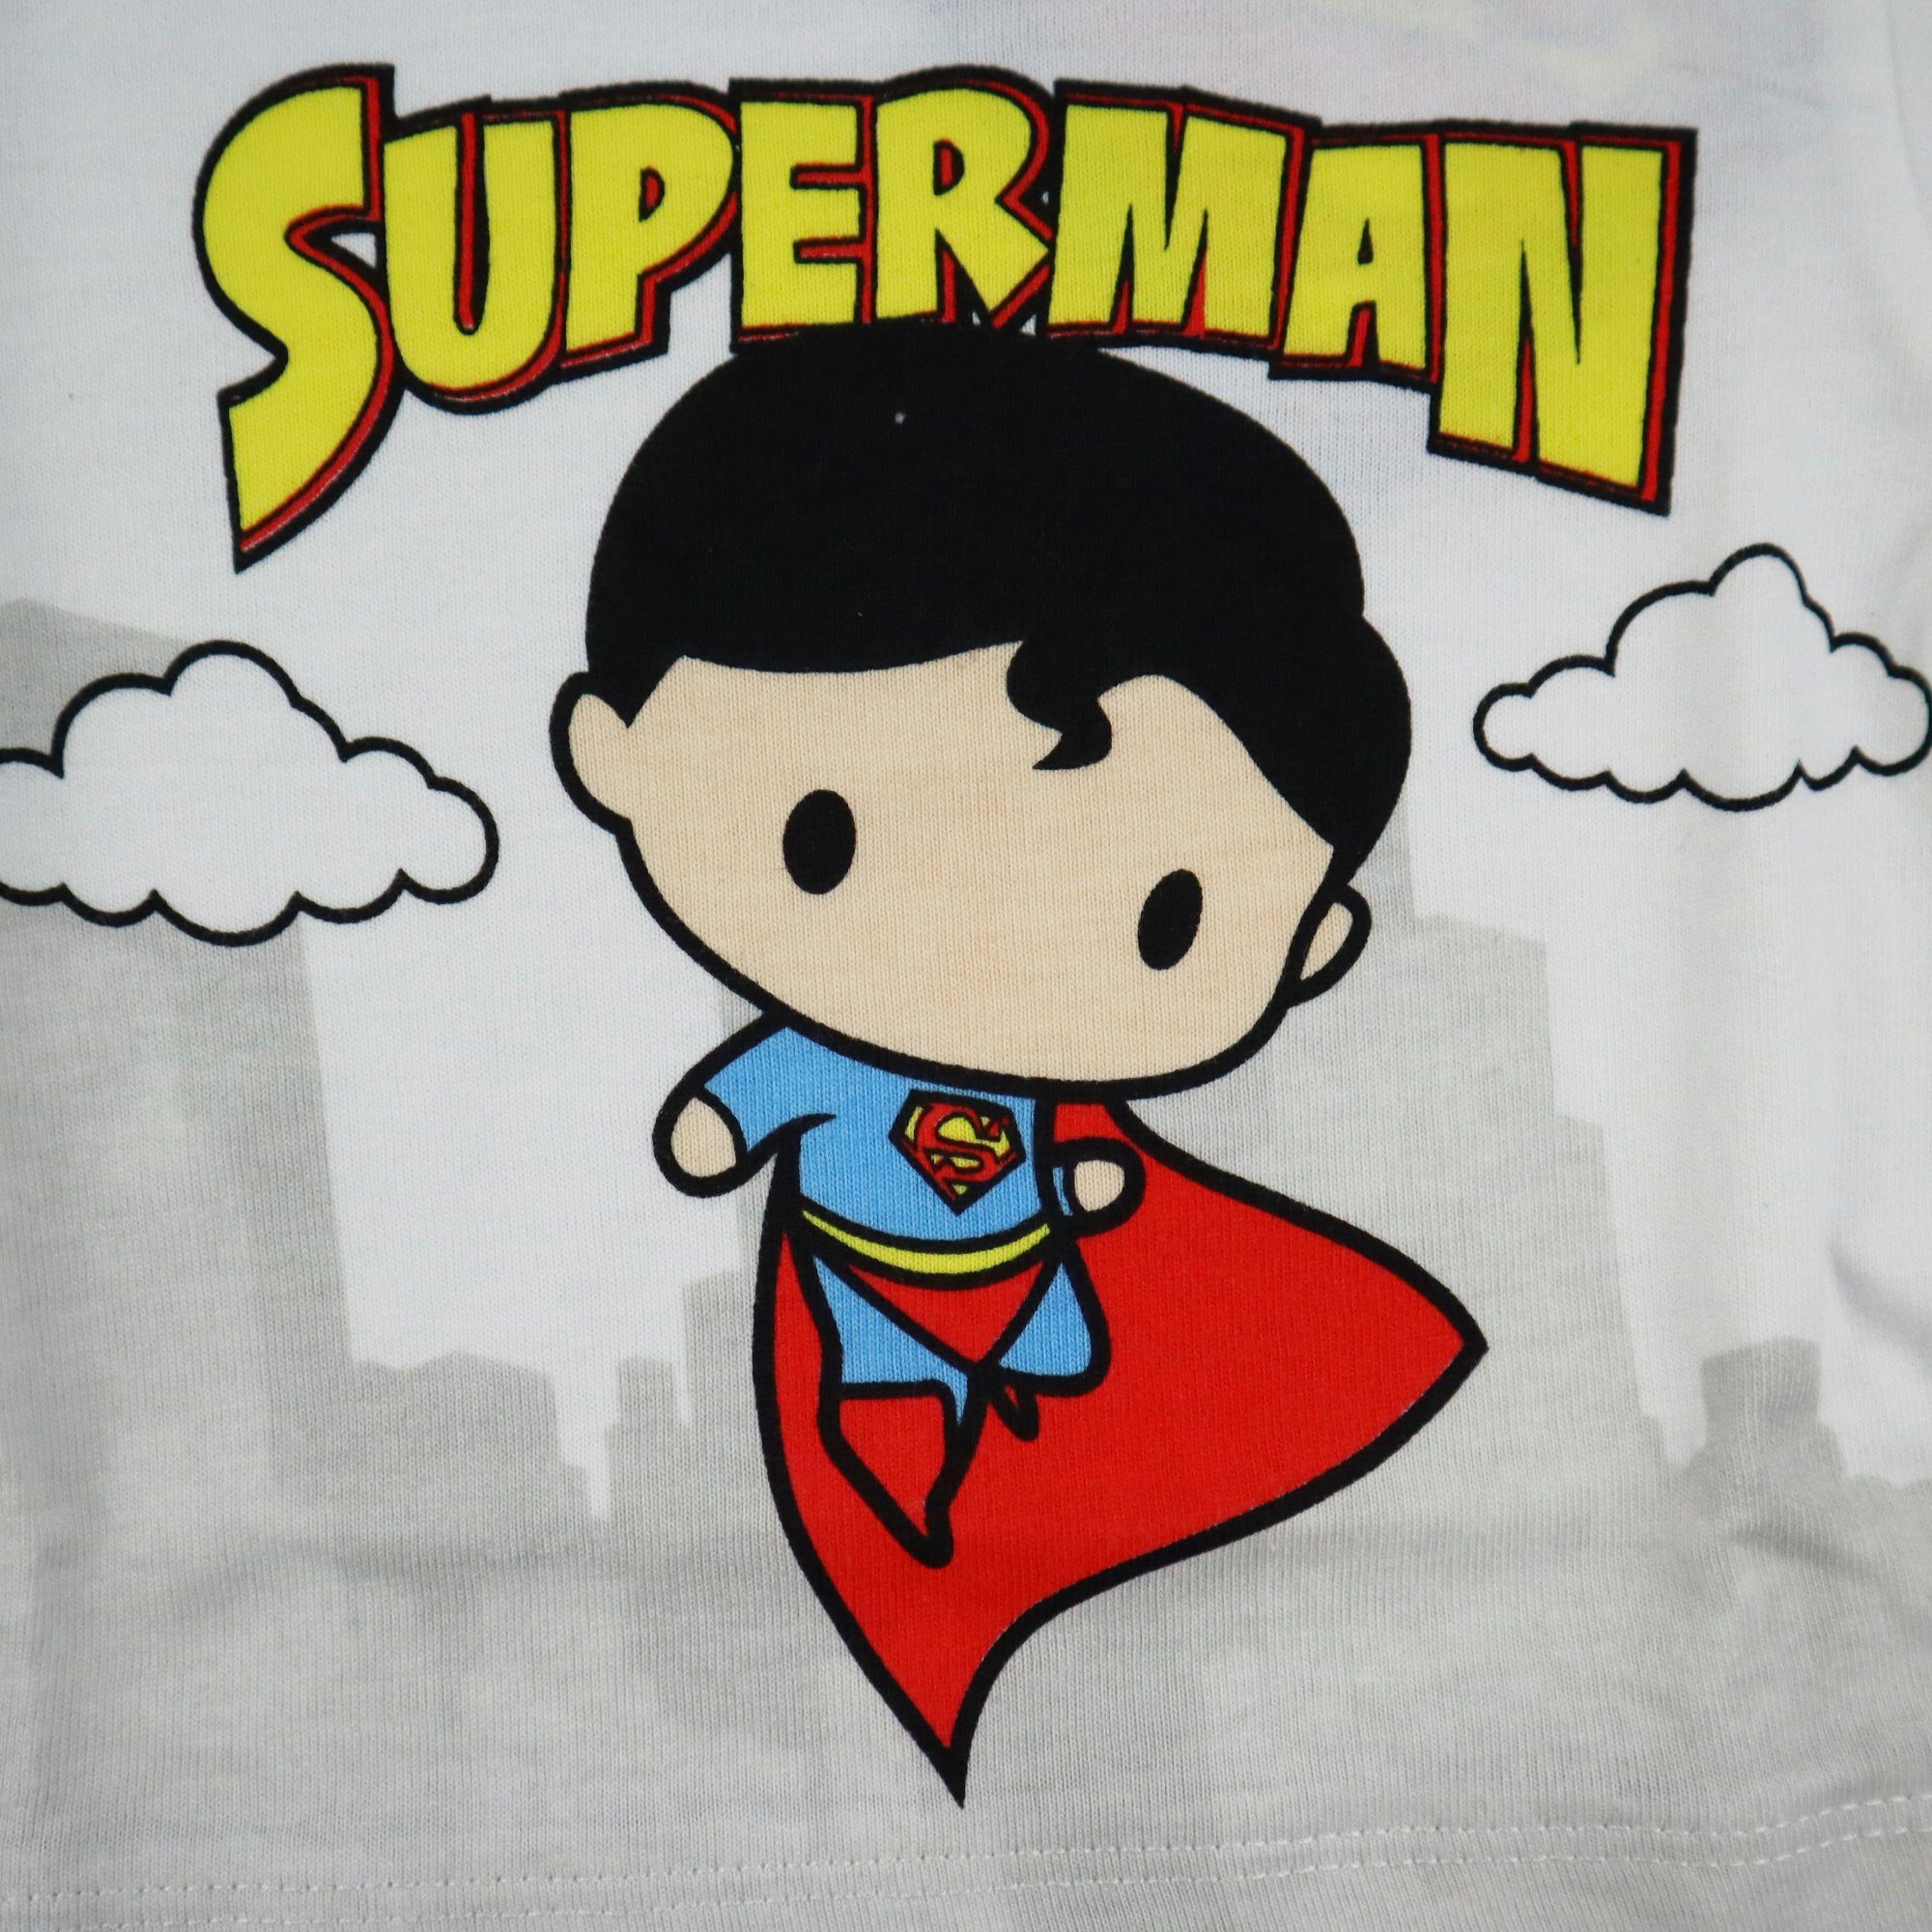 Superman Baumwolle Body Comics 100% Gr. DC bis Baby Kurzarmbody 62 92, Strampler